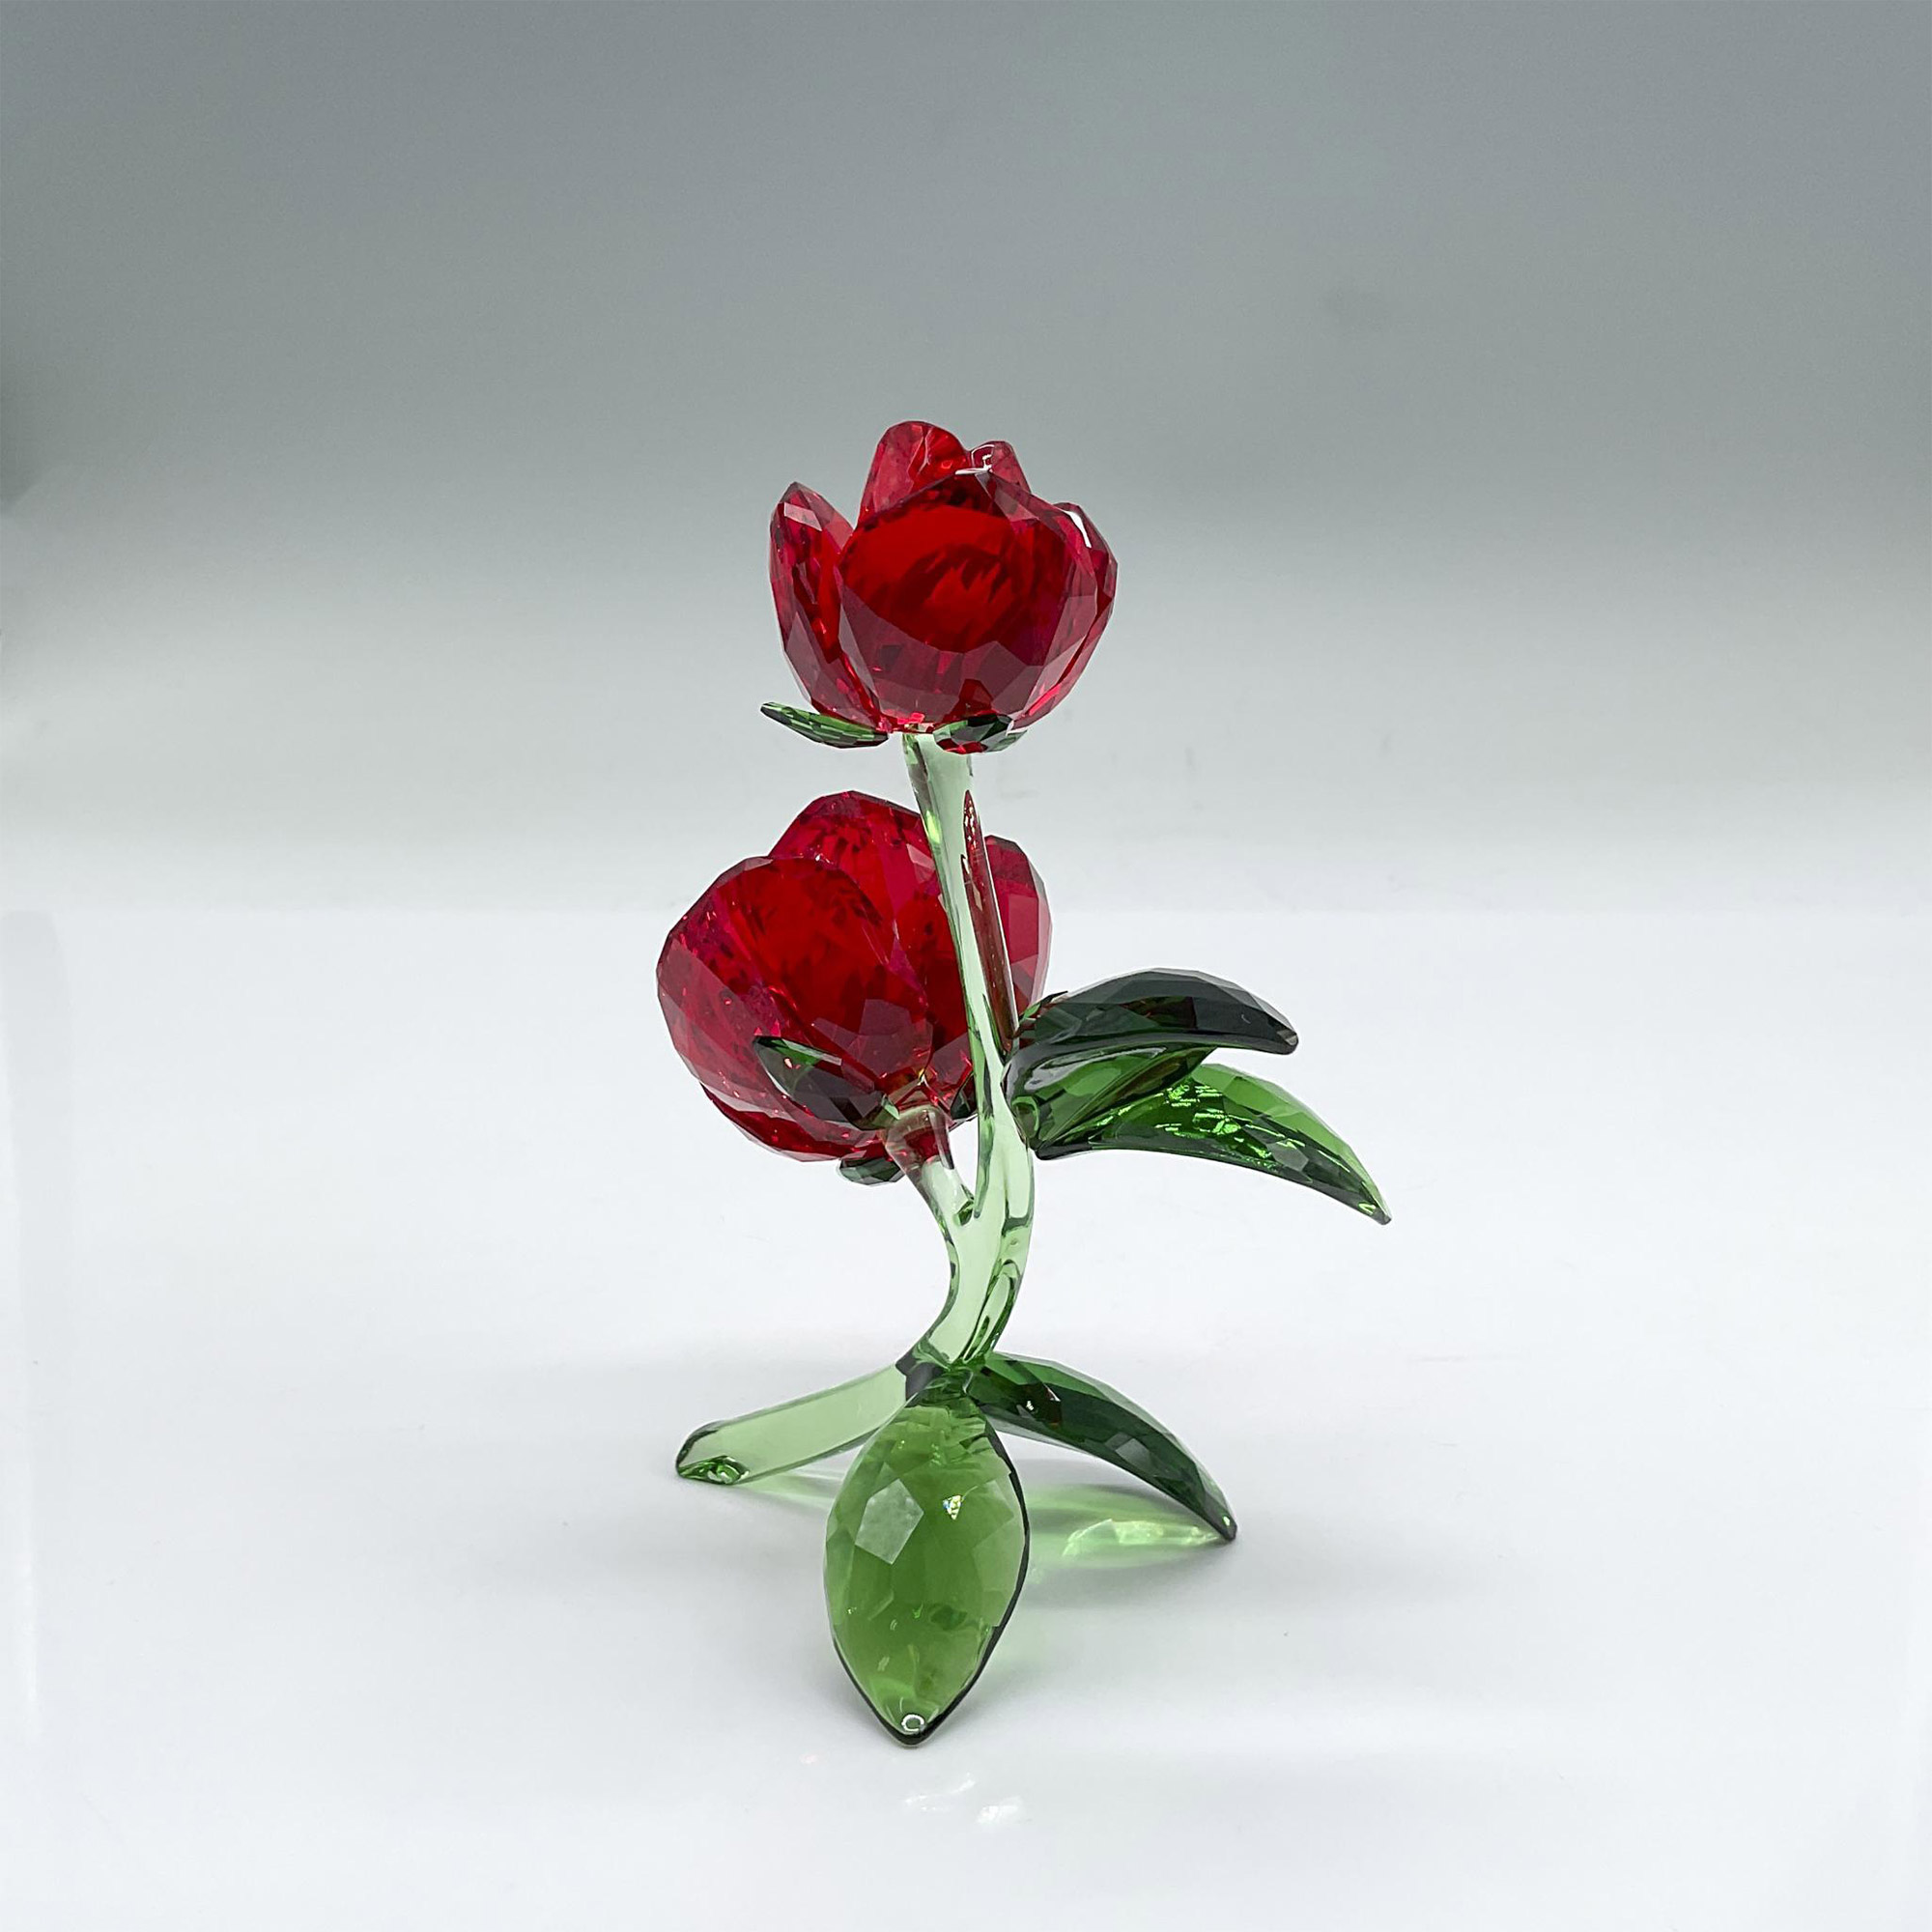 Swarovski Crystal Figurine, Red Rose - Image 2 of 4